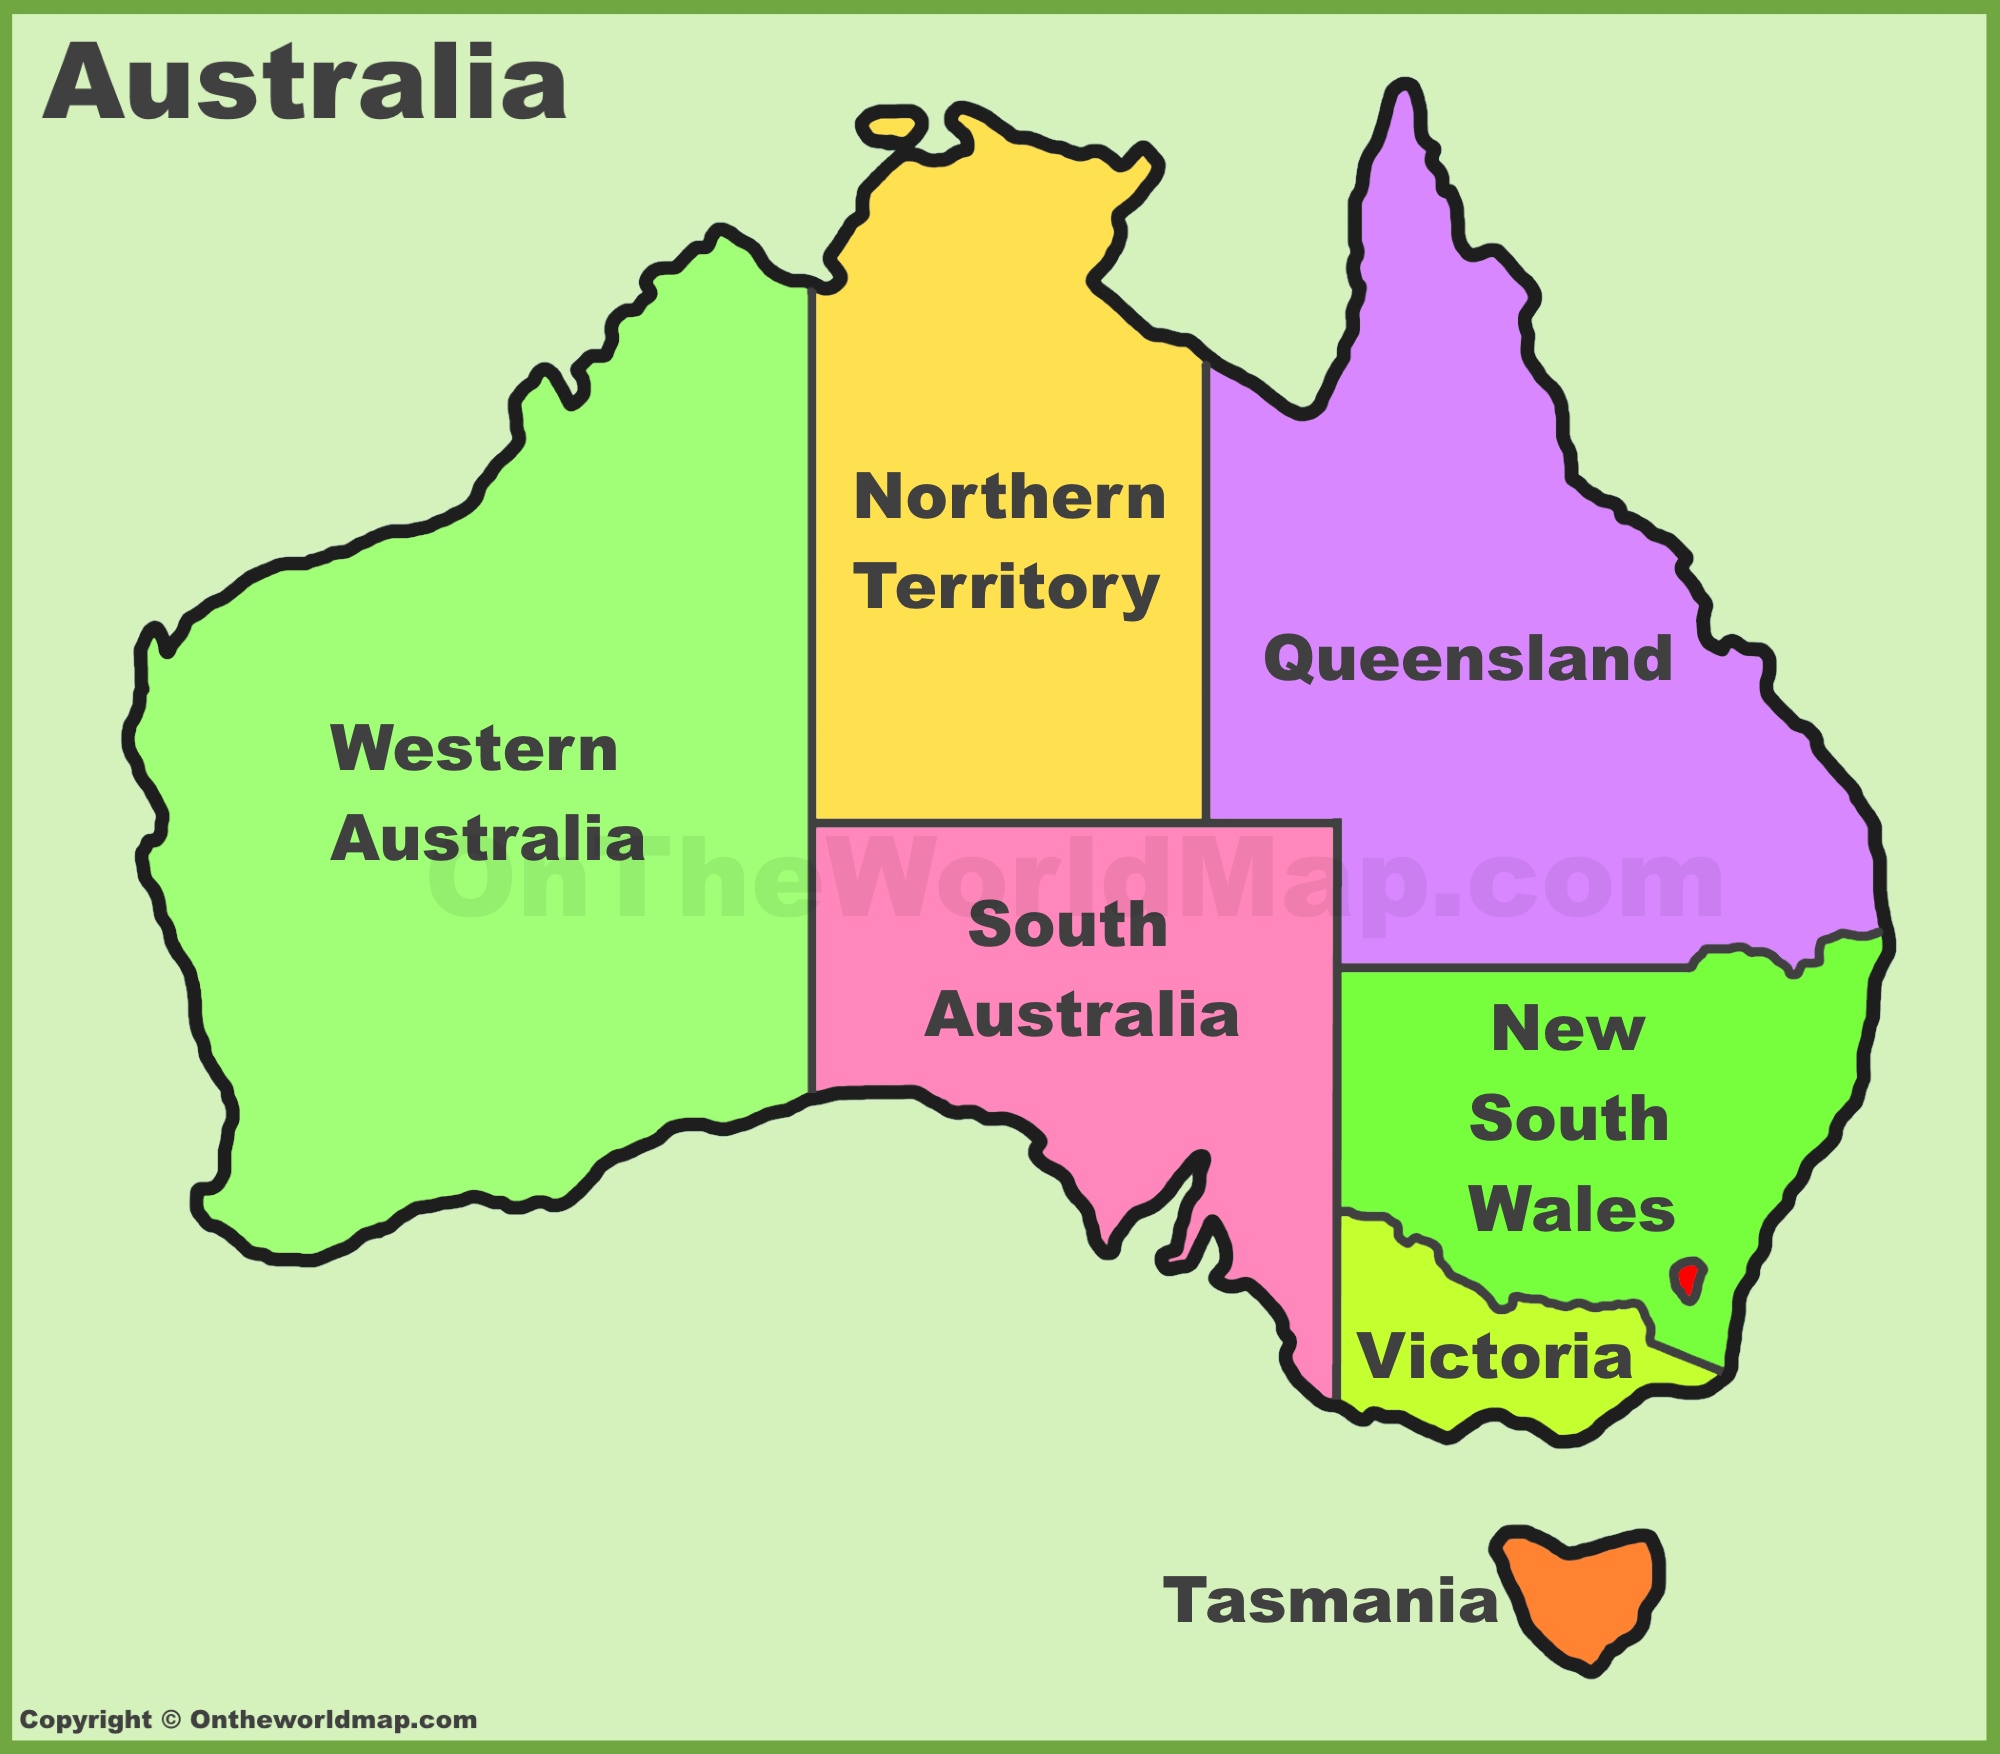 Australia states territories map | List of Australia states and territories